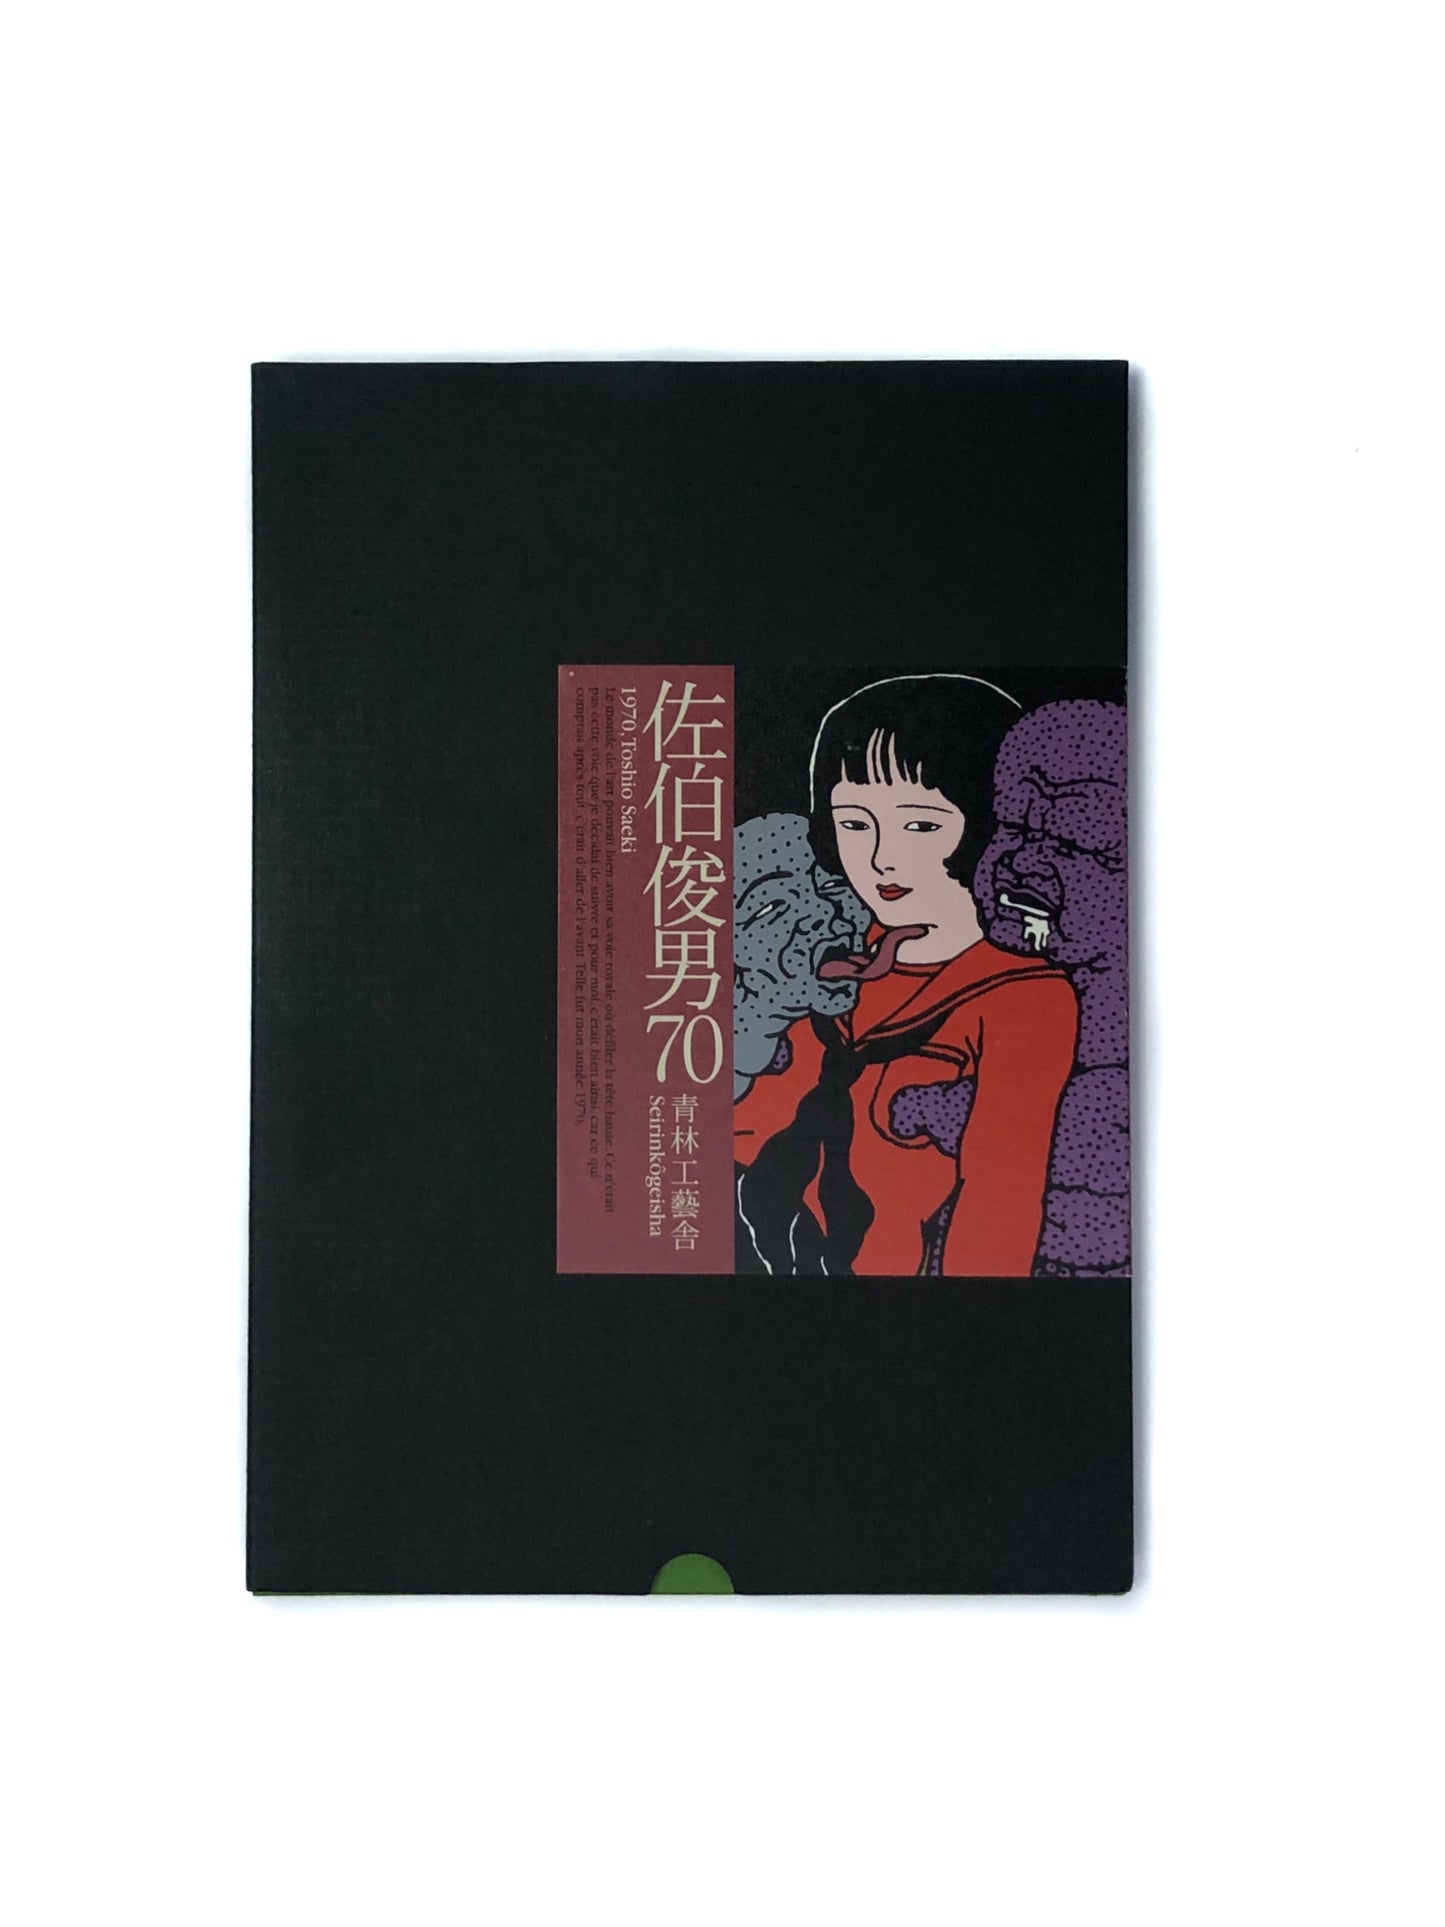 Toshio Saeki 70 1970 - Signed book